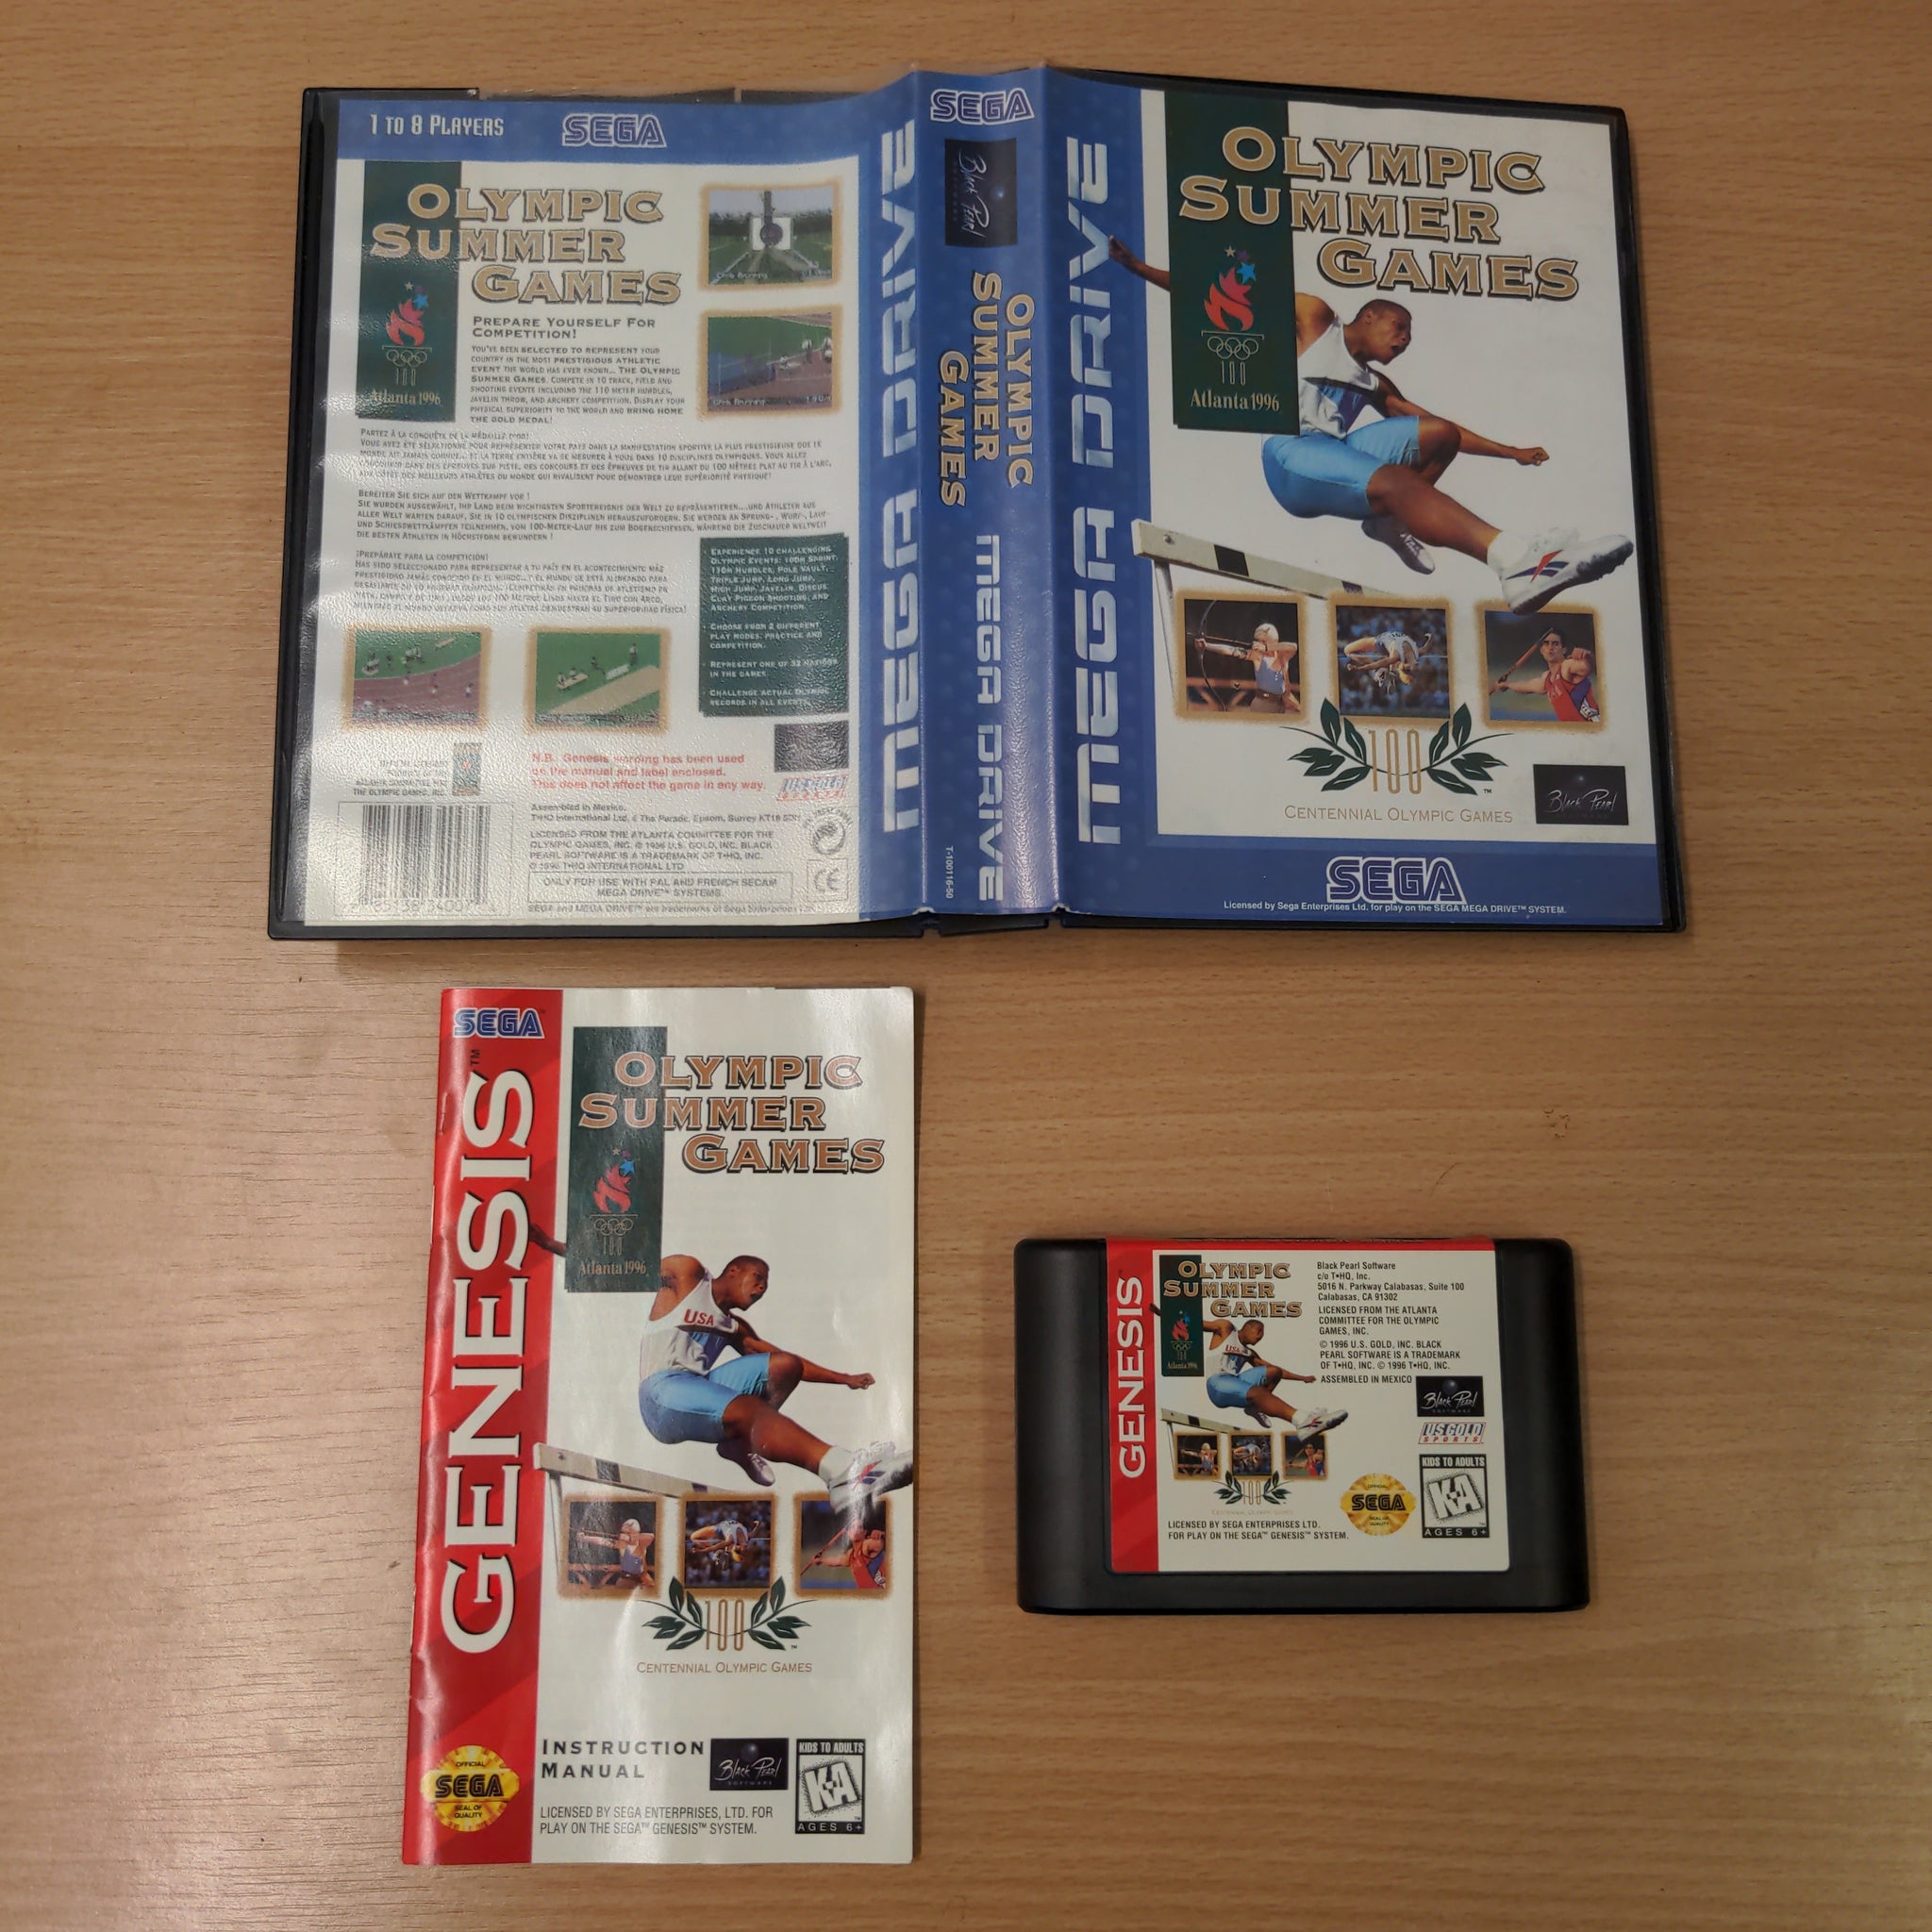 Olympic Summer Games Sega Mega Drive game complete